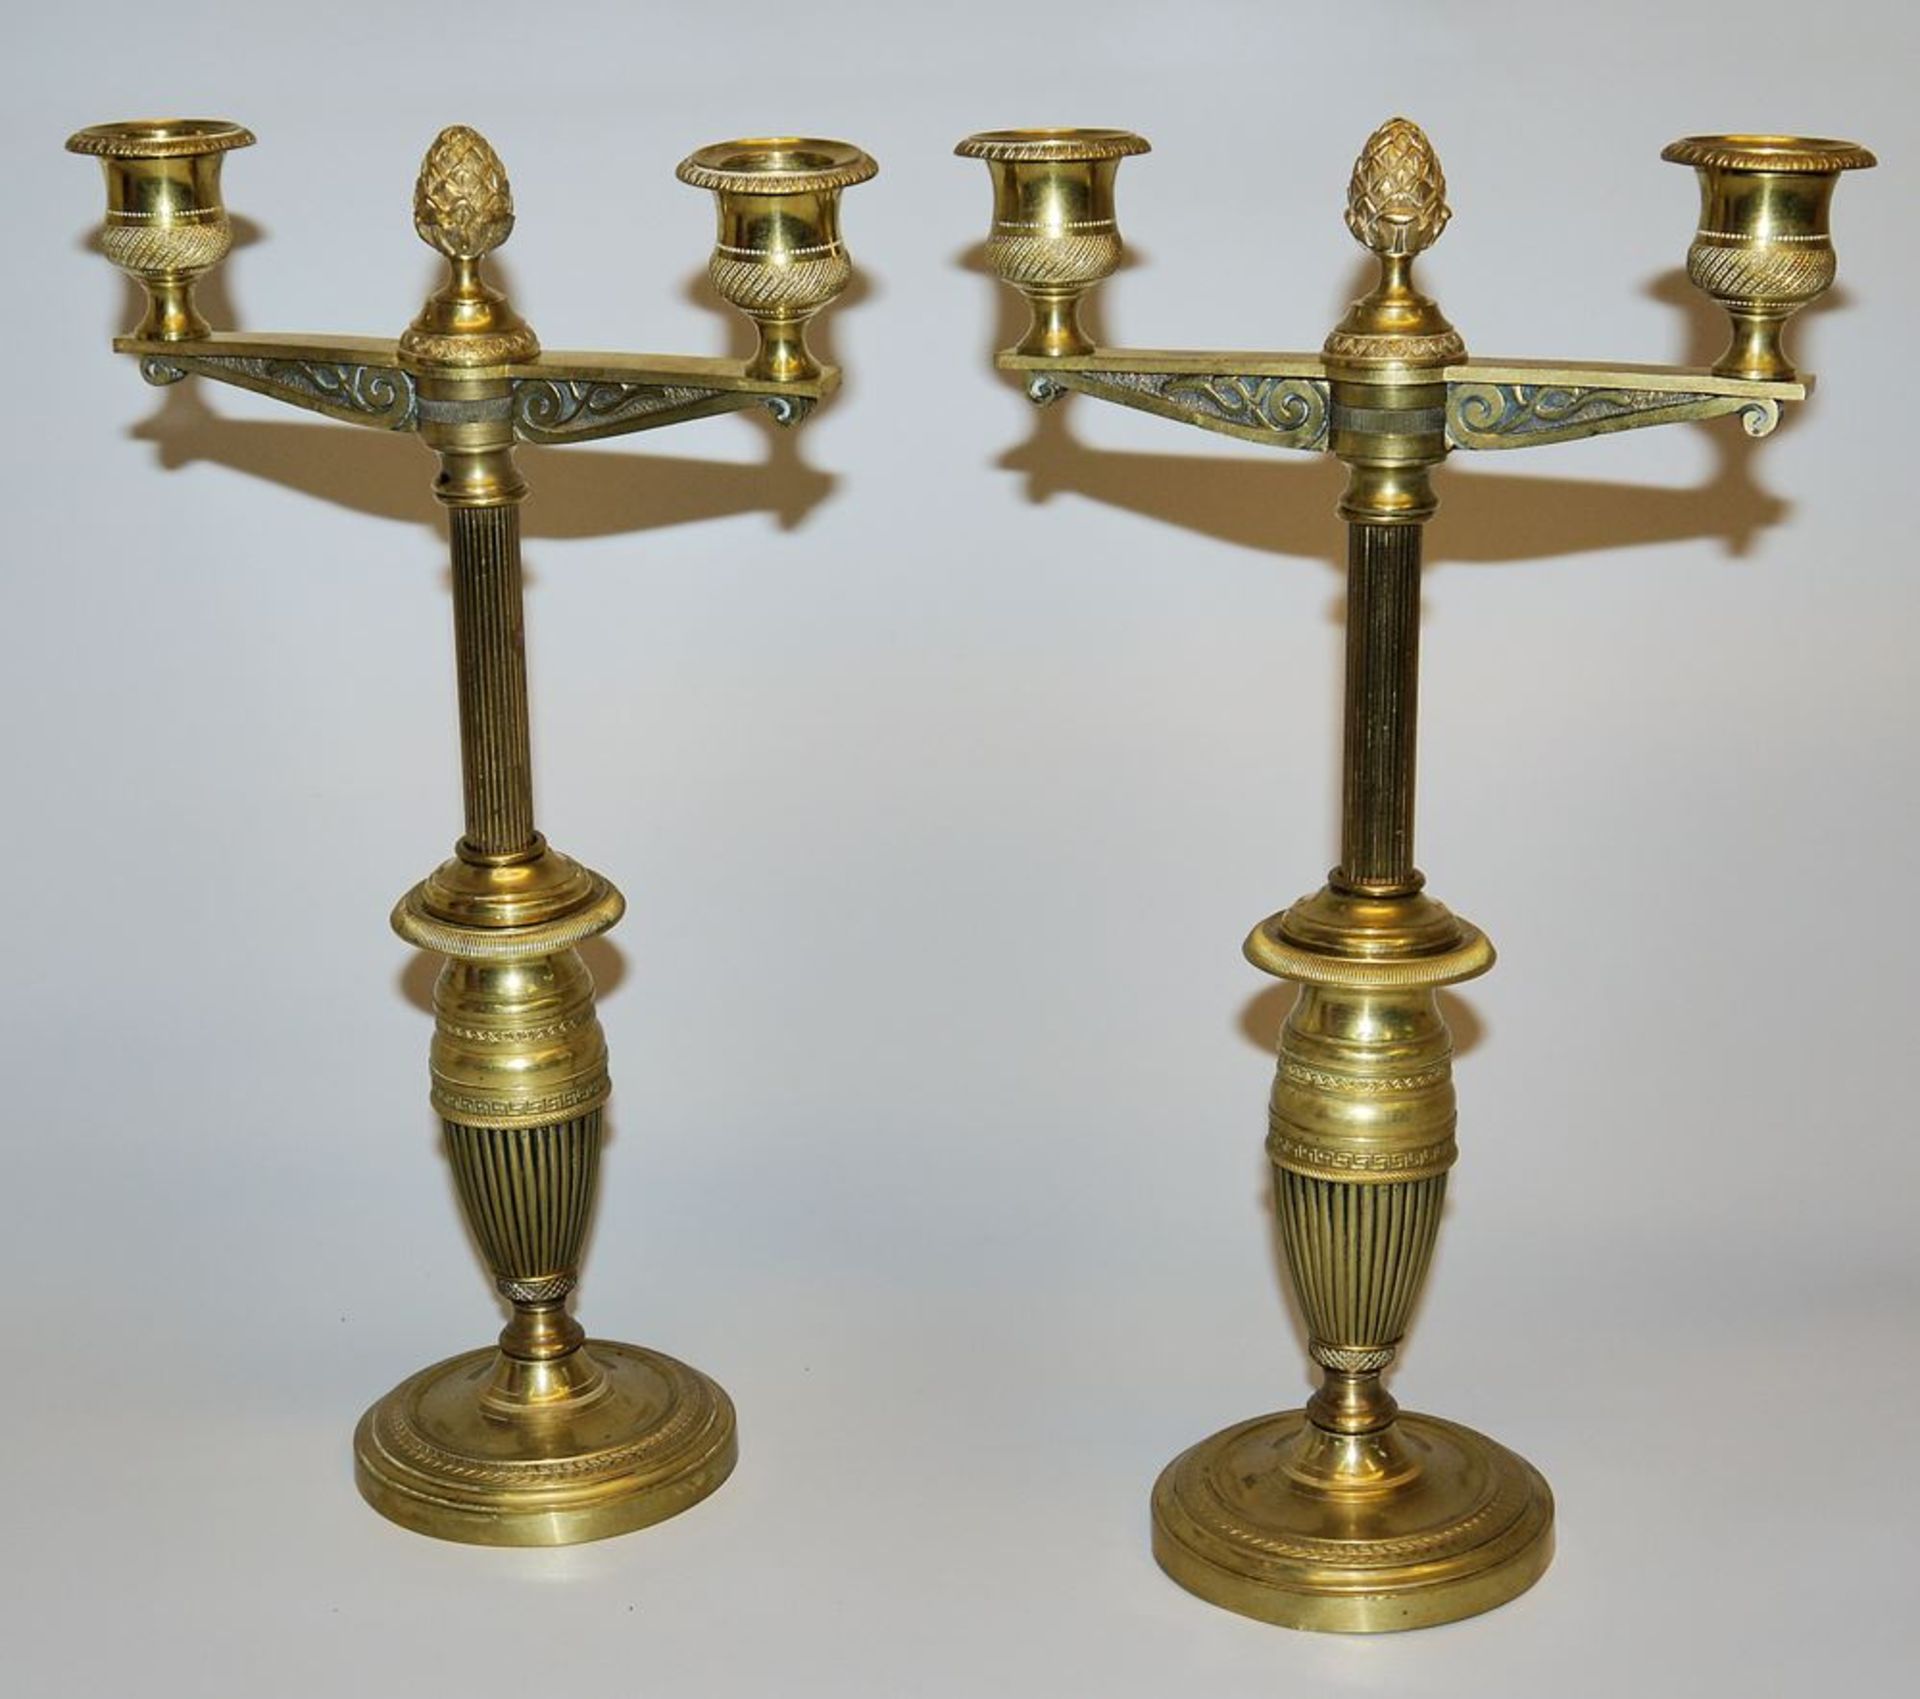 Pair of double Empire candlesticks, brass, fire-gilt, France, c. 1810